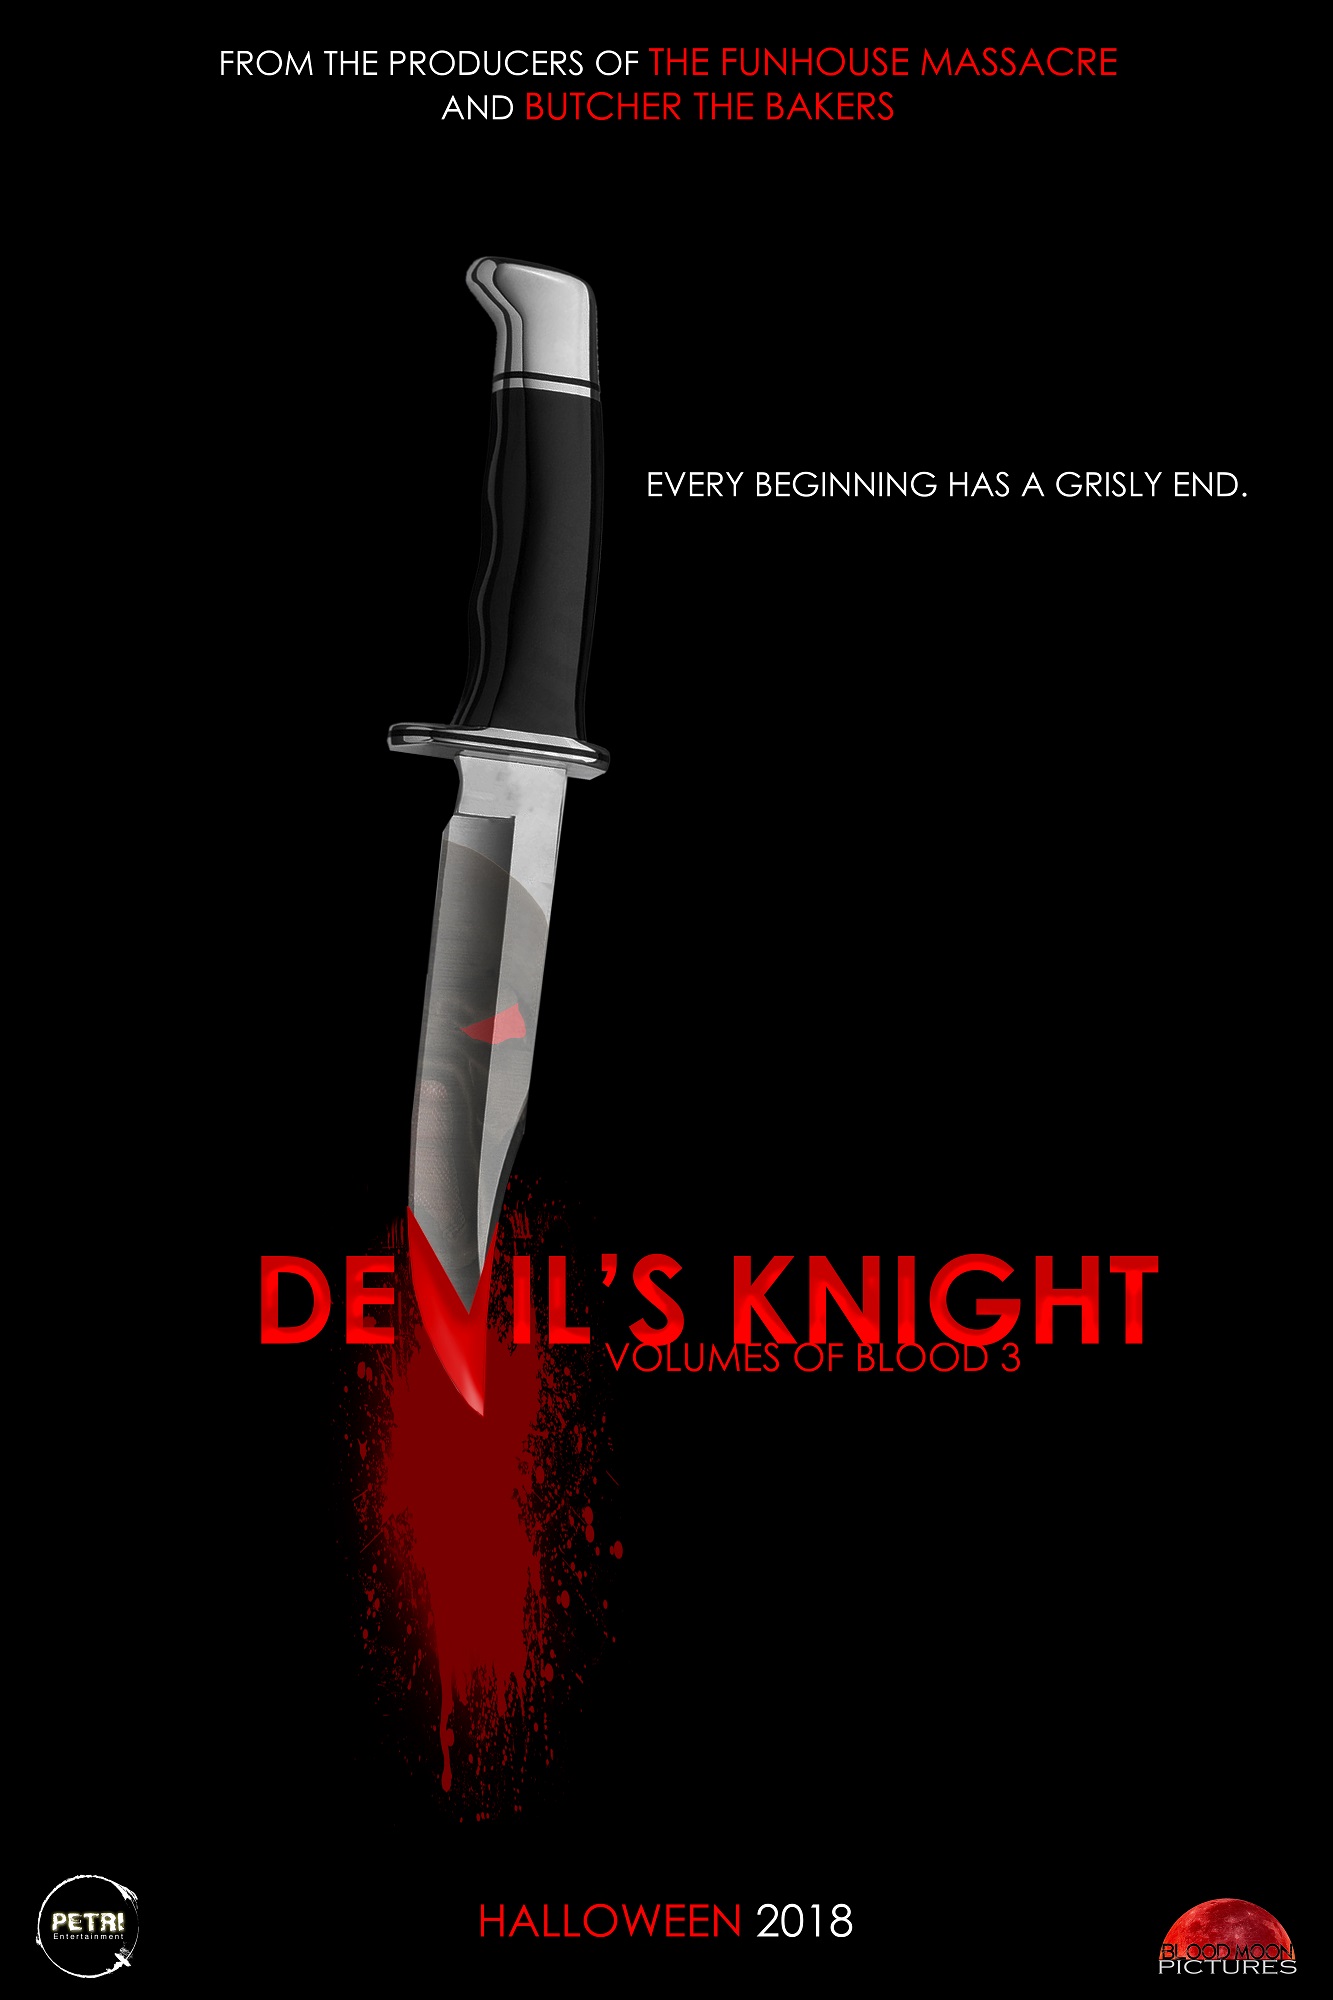 VOB3 Teaser Poster - Devil's Knight